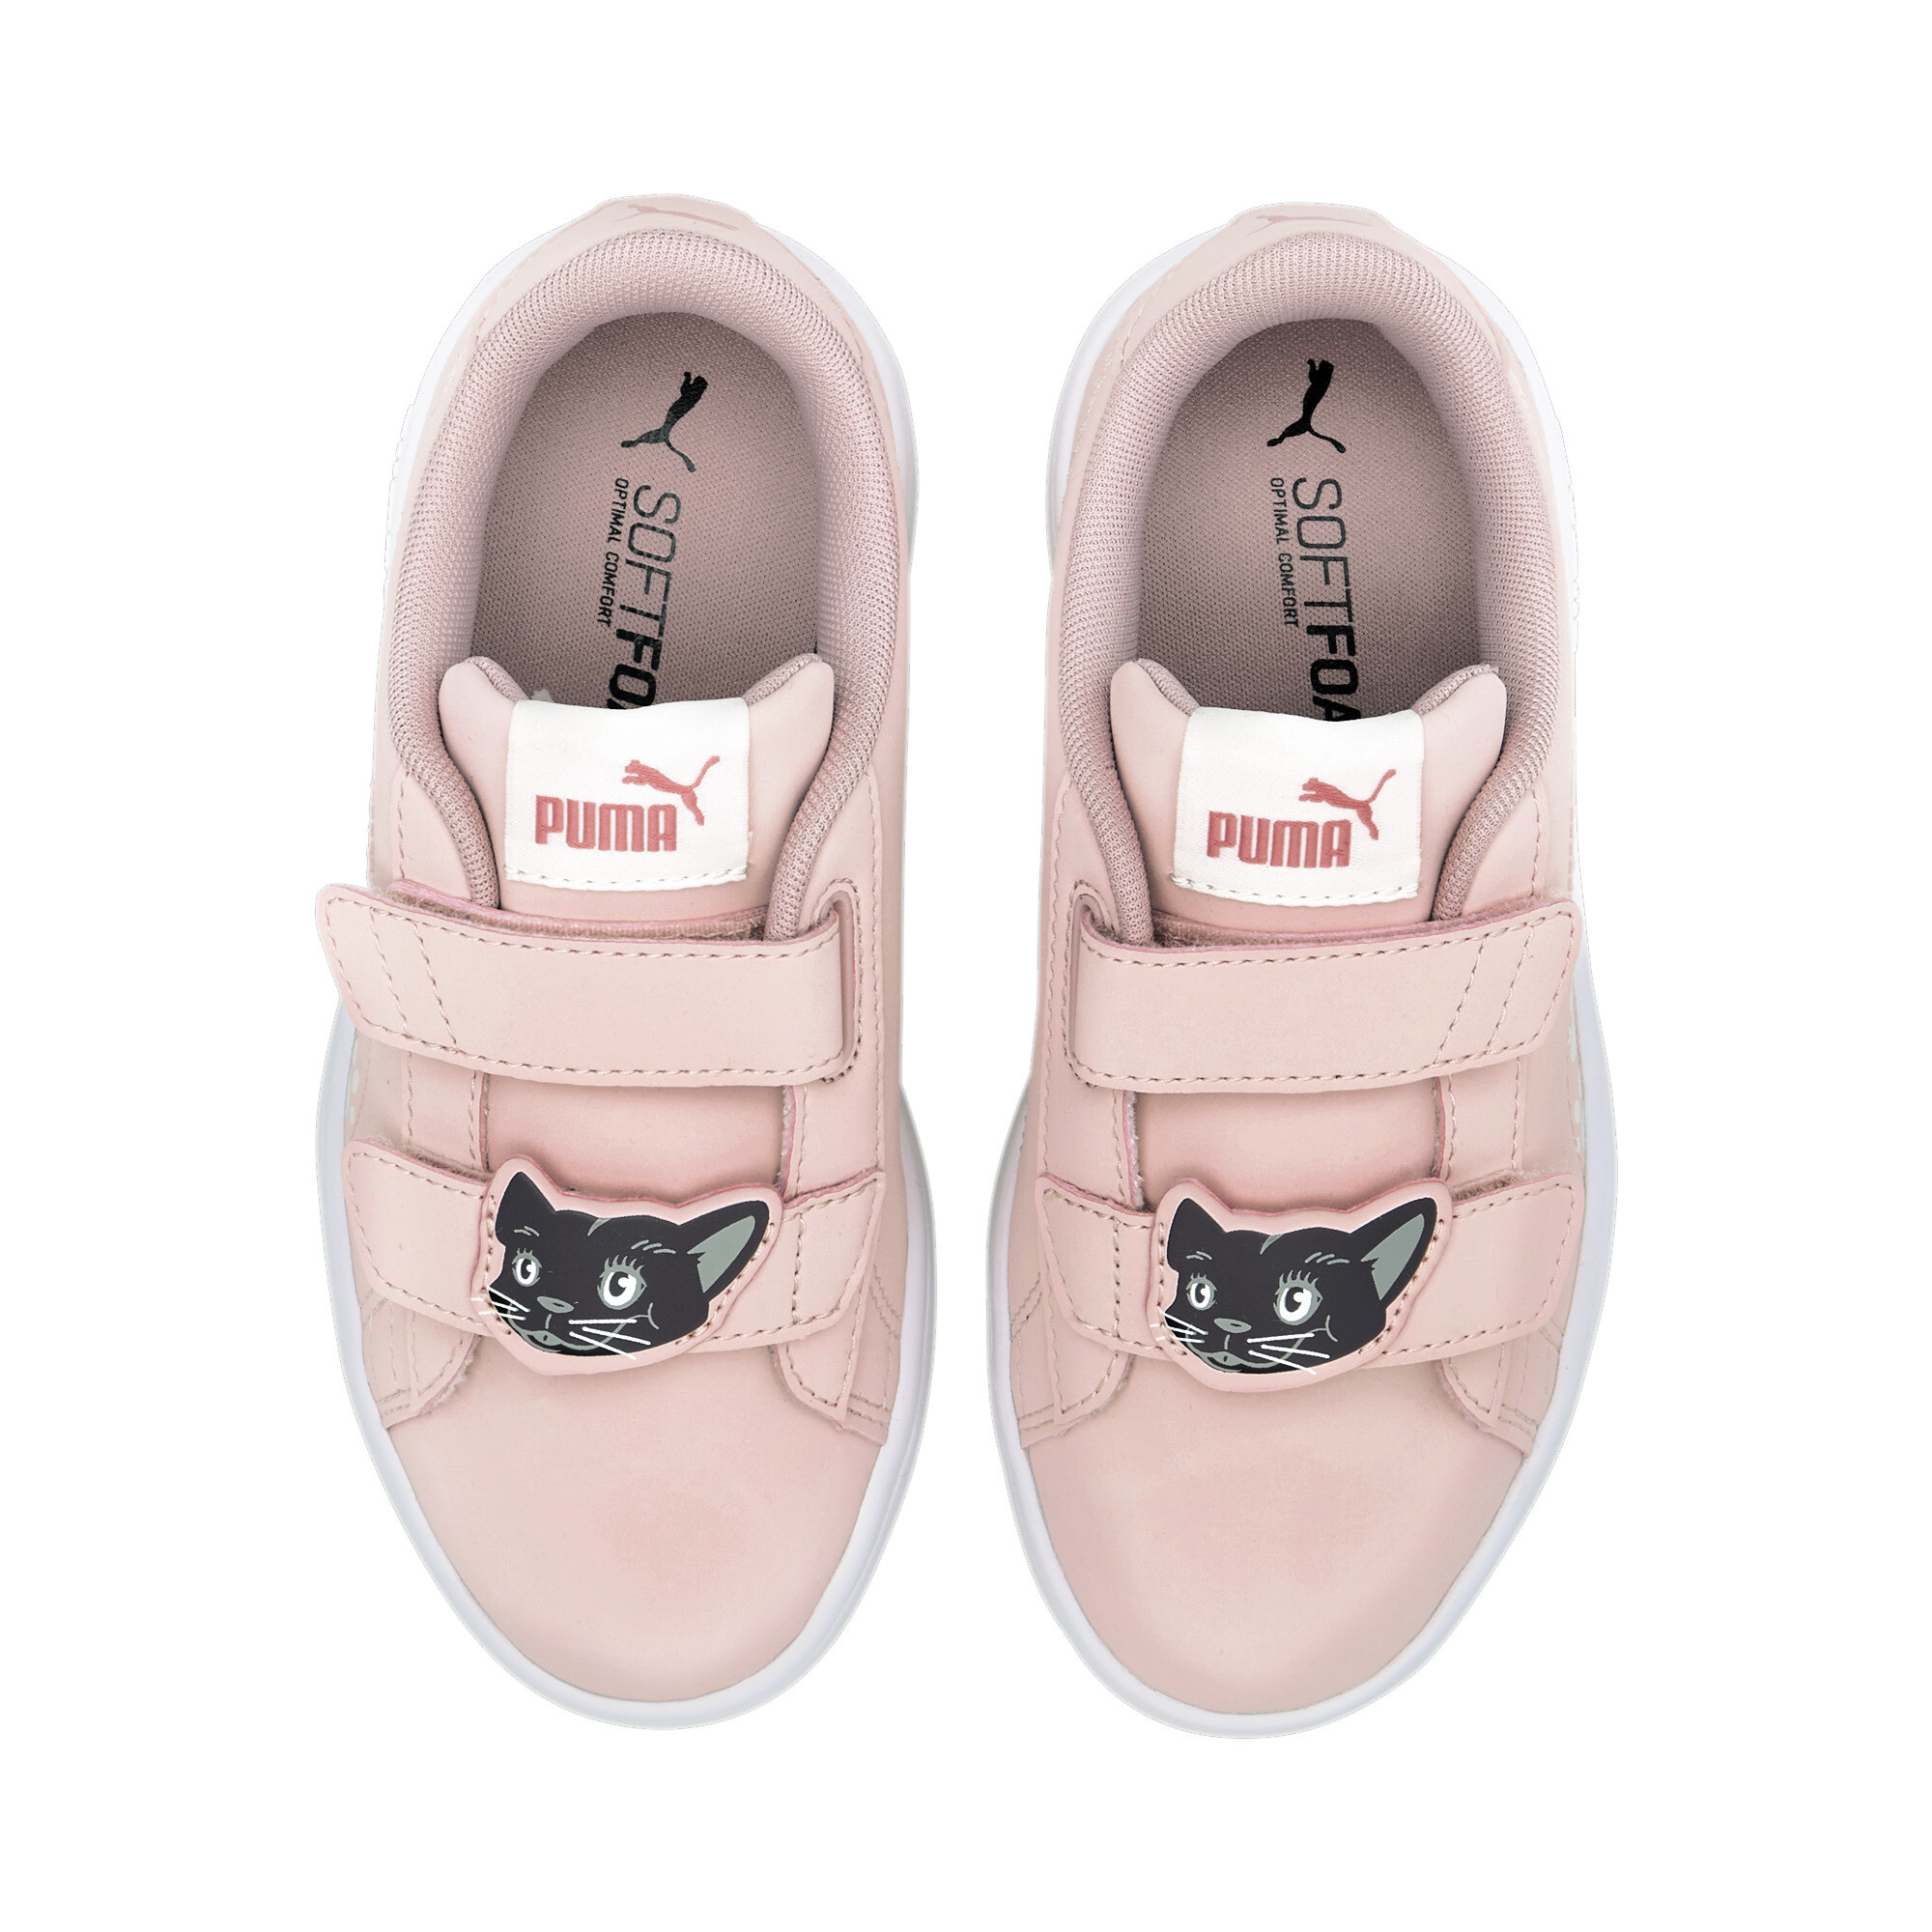 puma infant shoes australia